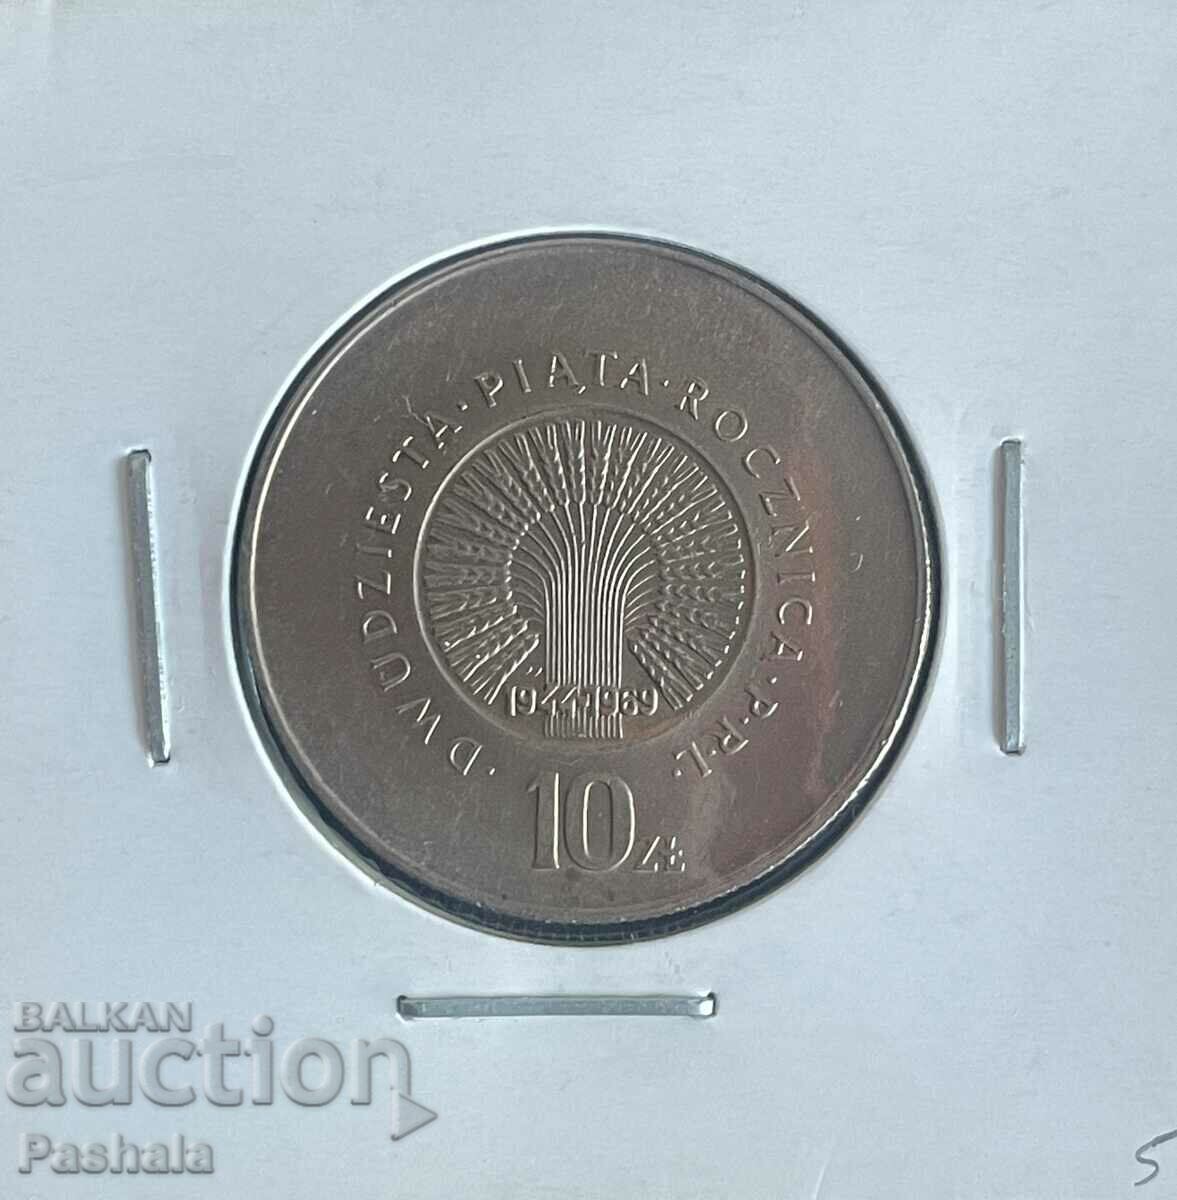 Poland 10 zlotys 1969